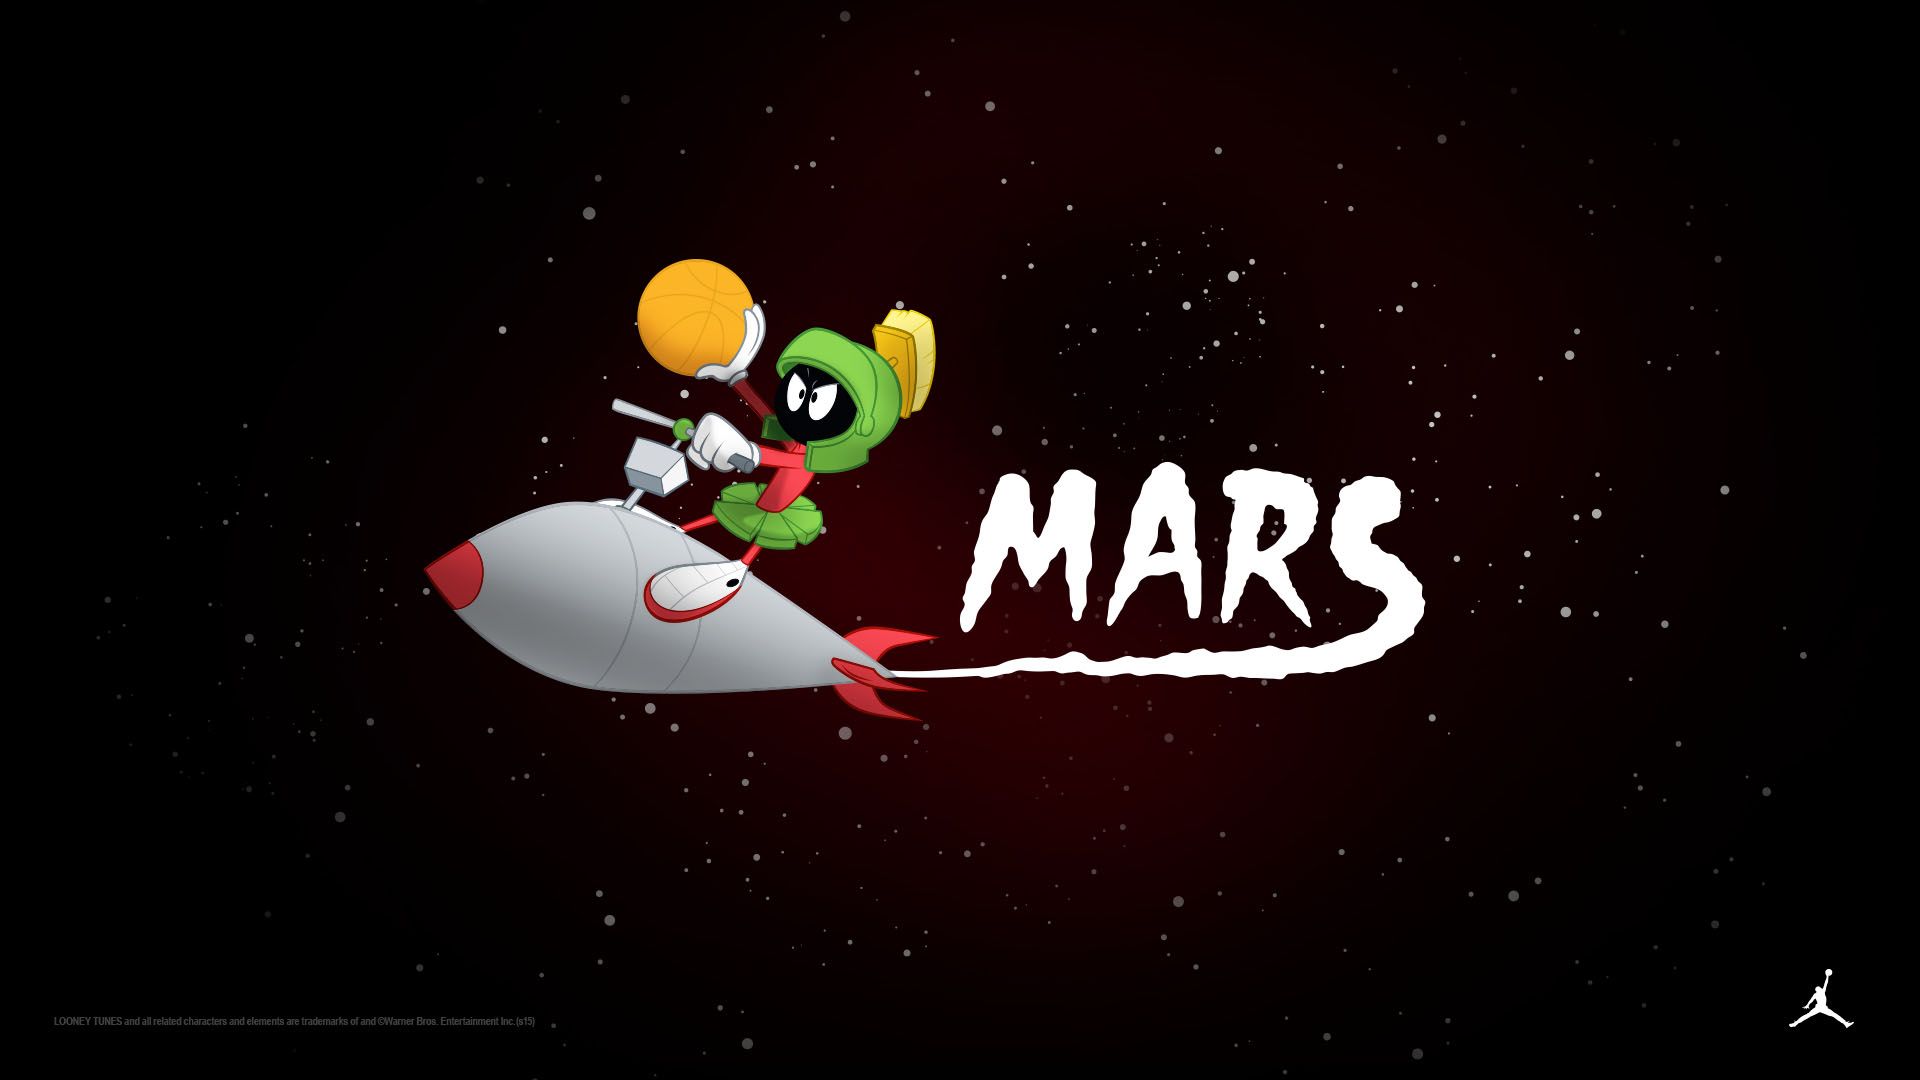 Marvin The Martian Wallpaper. Nike.com